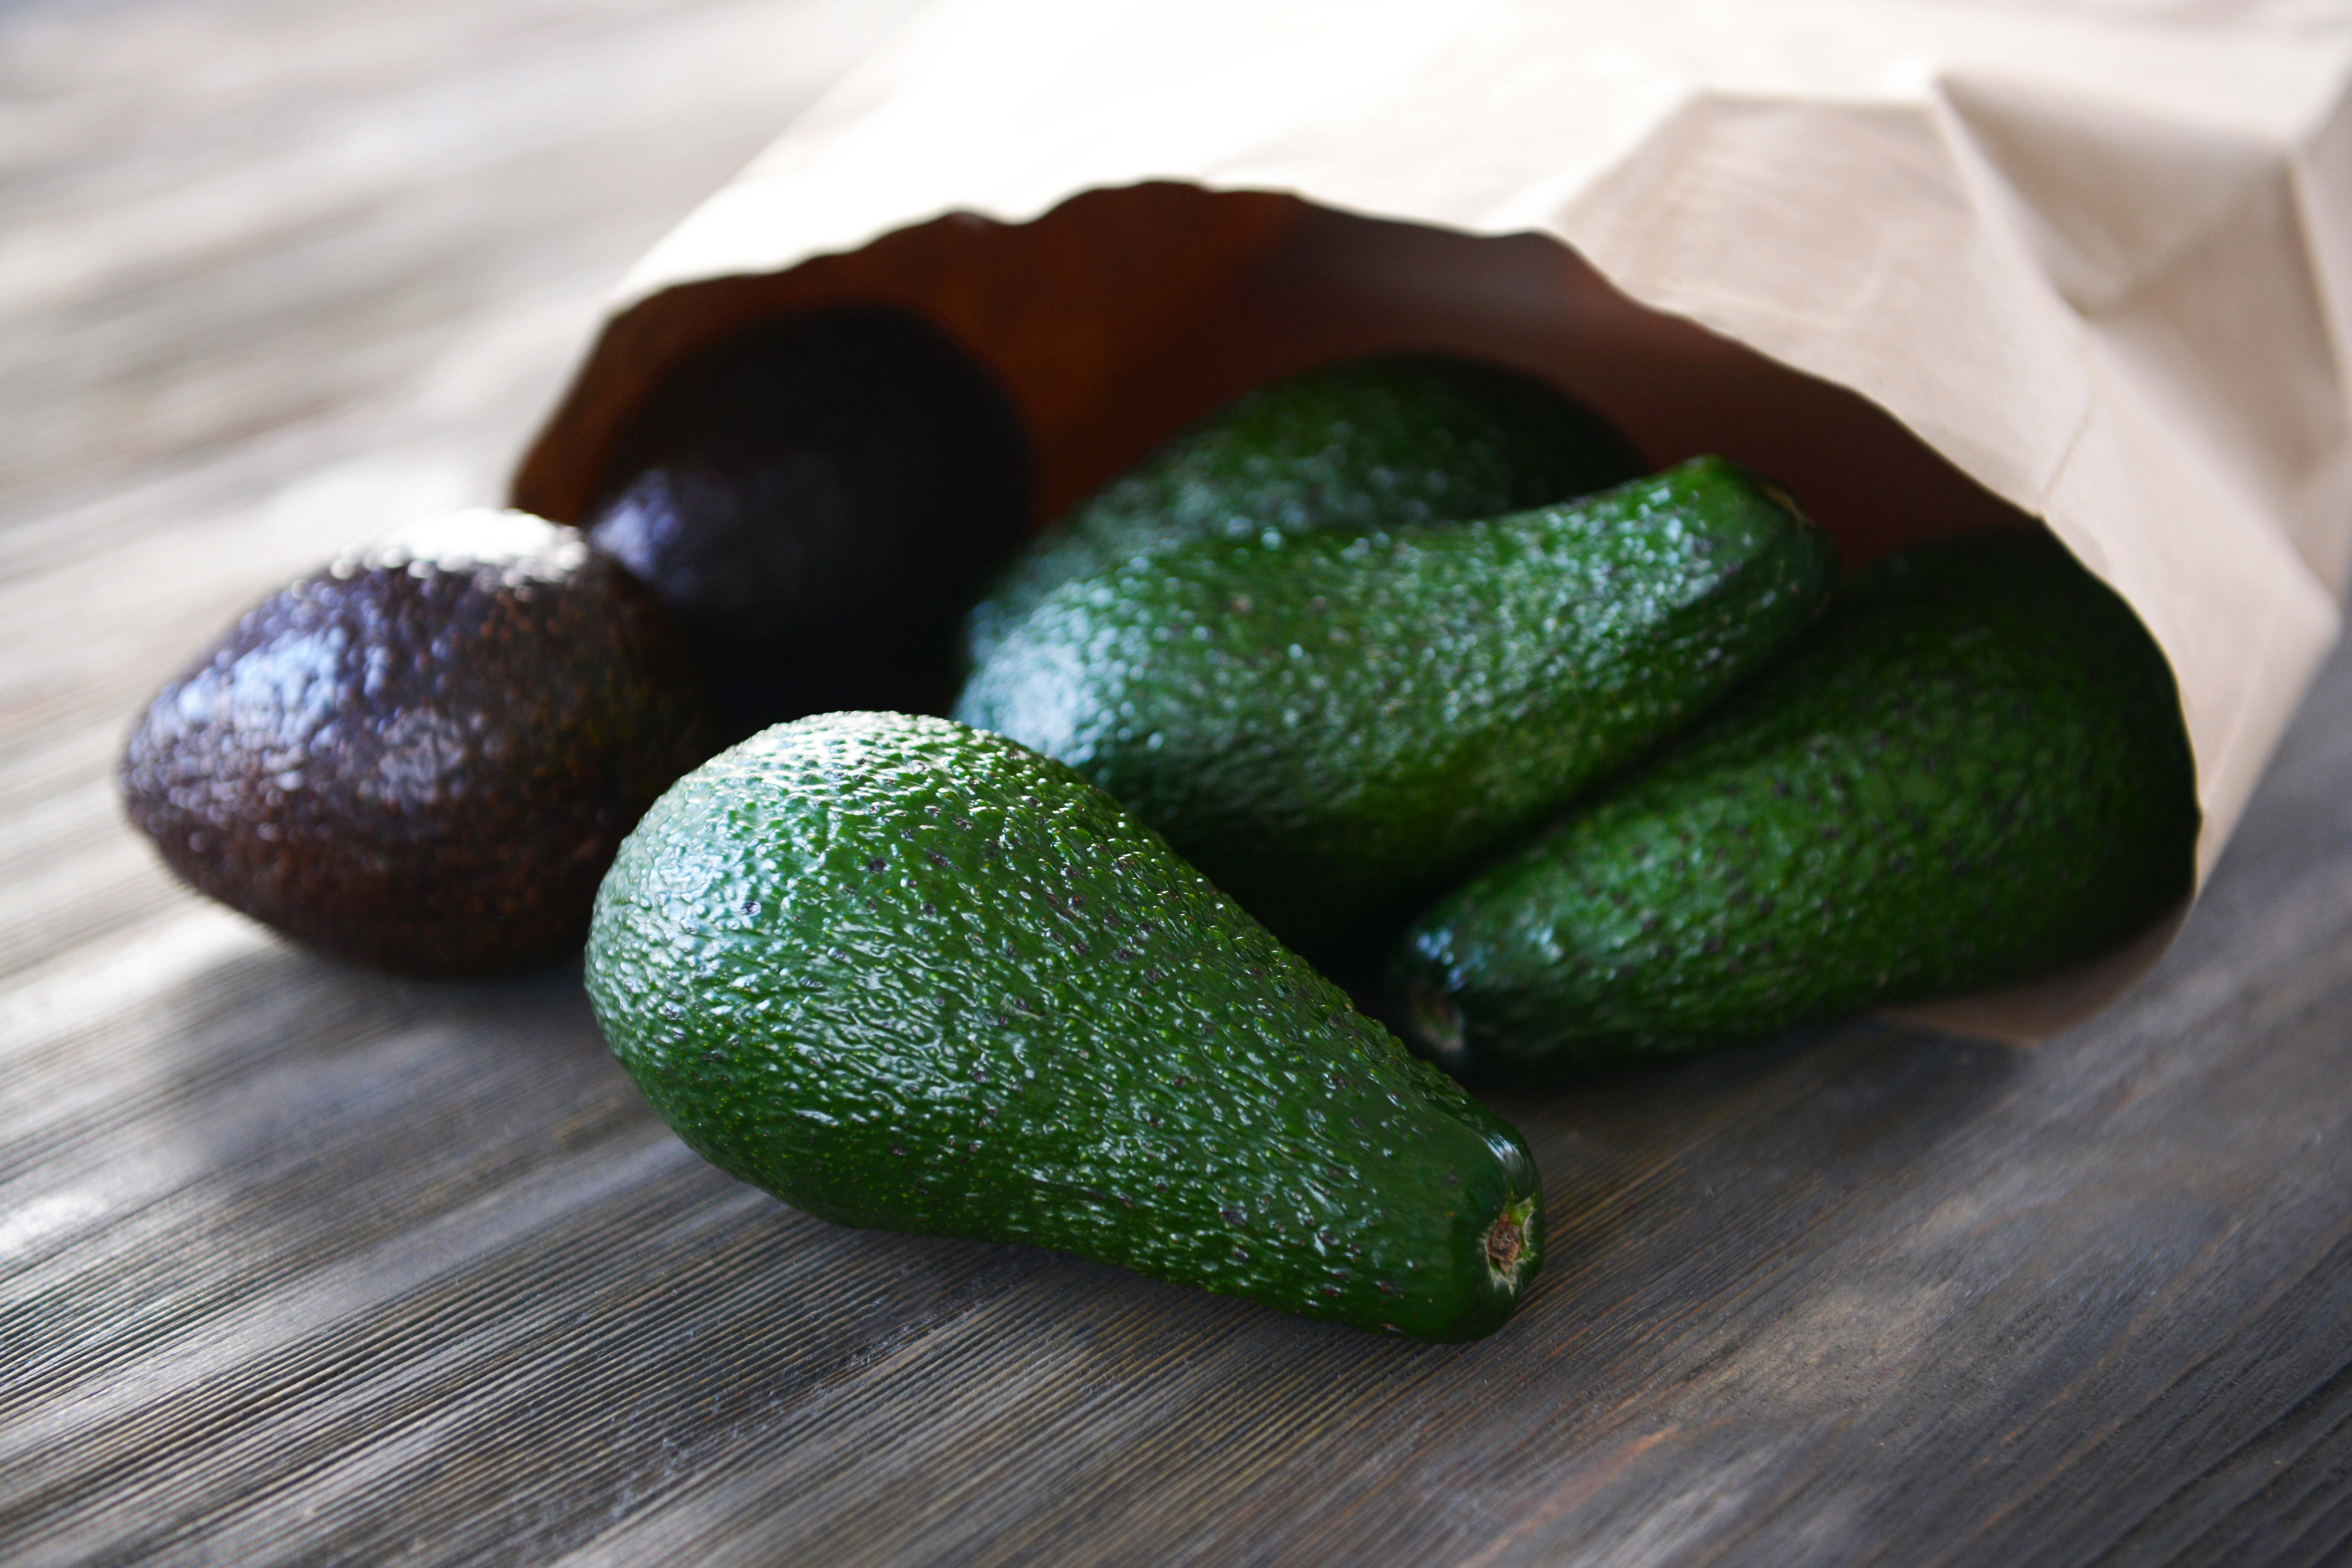 how-to-quickly-ripen-an-avocado